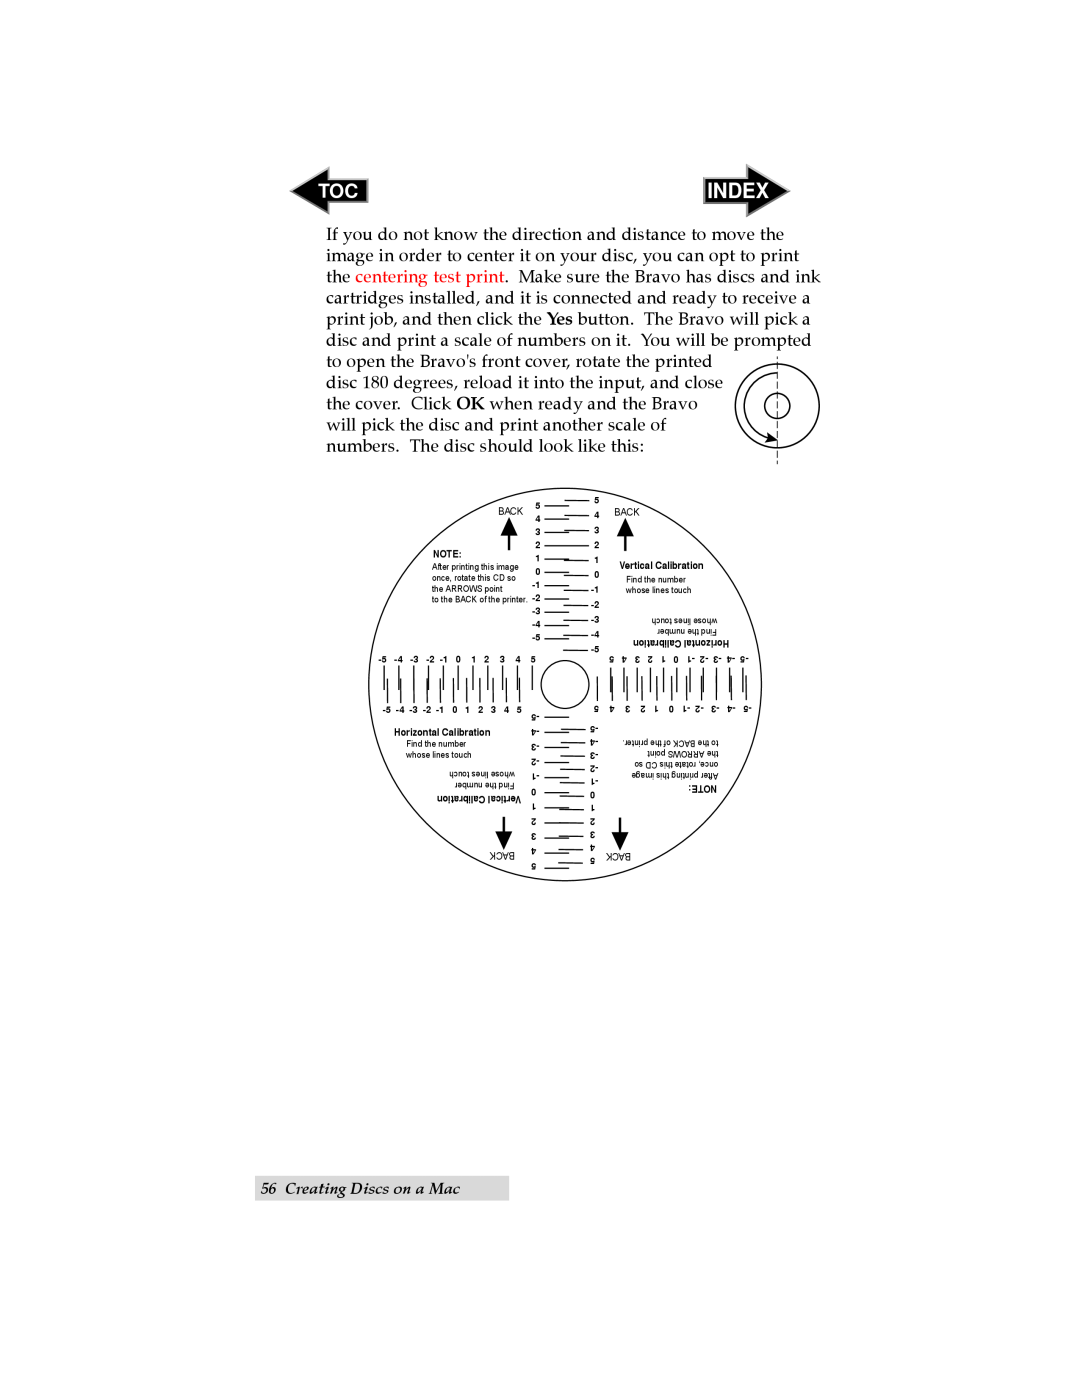 Primera Technology II user manual Toc Index, Creating Discs on a Mac, Back 